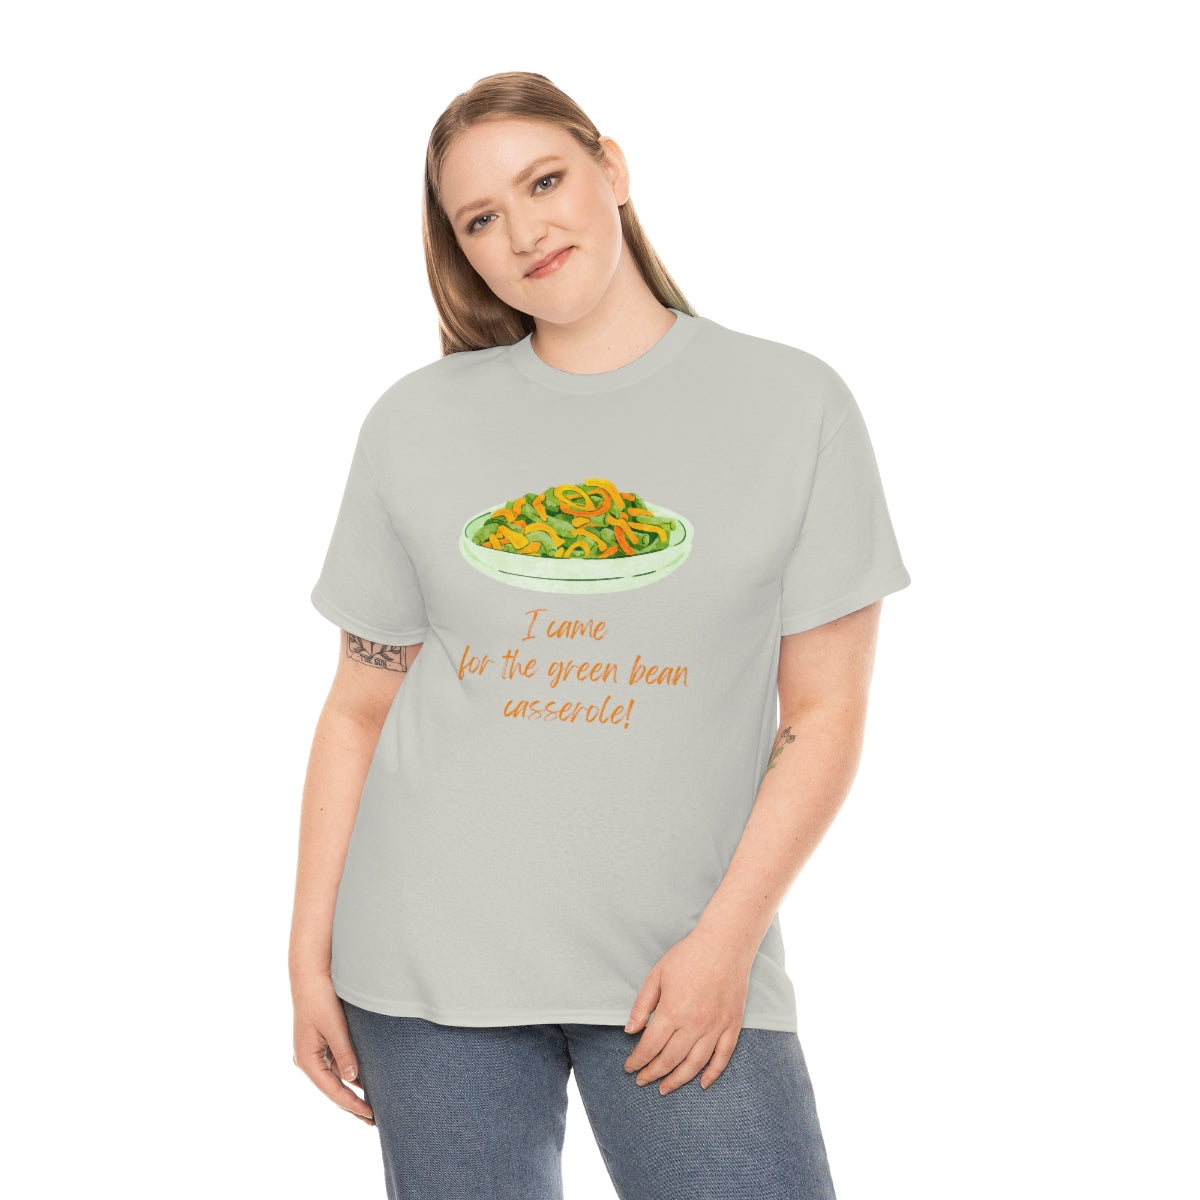 Thanksgiving Tshirt Green Bean Cassersole T-shirt Christmas Tee Holiday Shirt Funny T-Shirt Adult Tees Food Lover Tee Cute Shirts Women - The Good Life Vibe